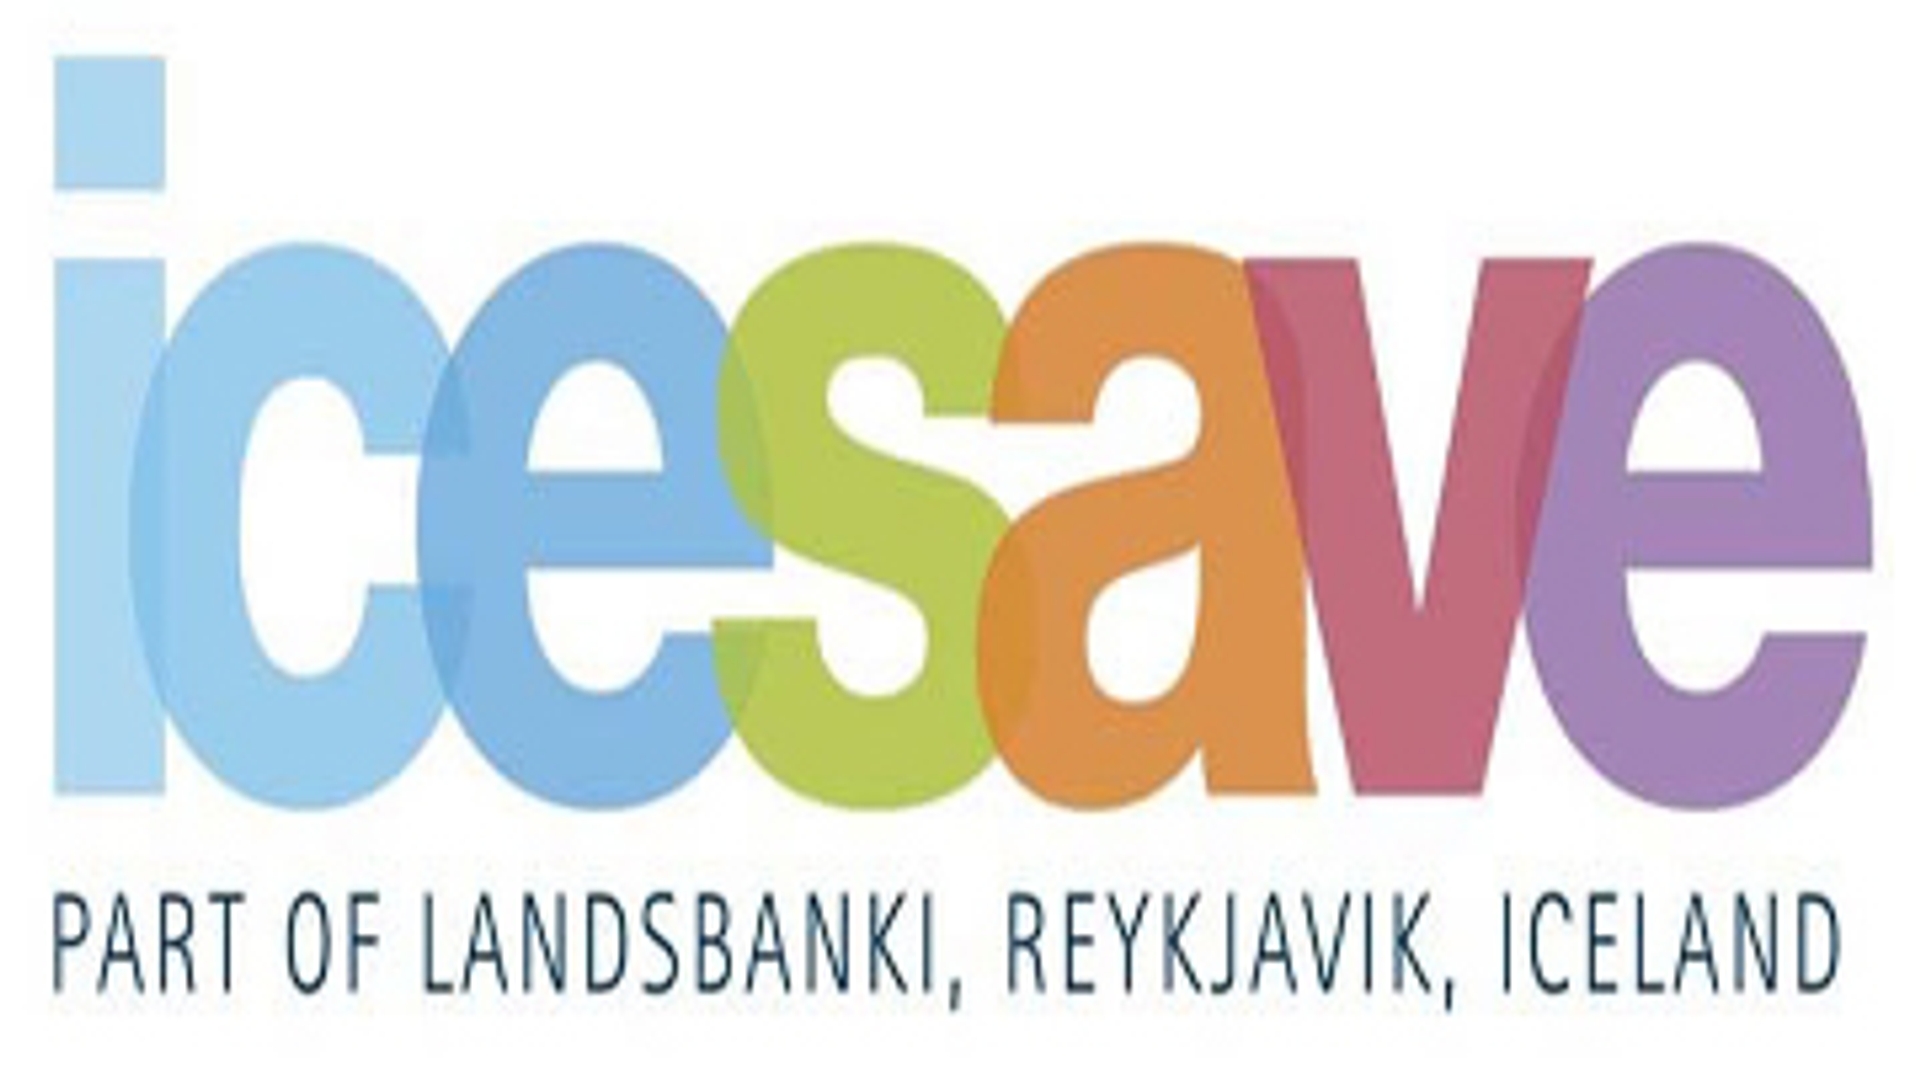 icesave-logo-groot.jpg